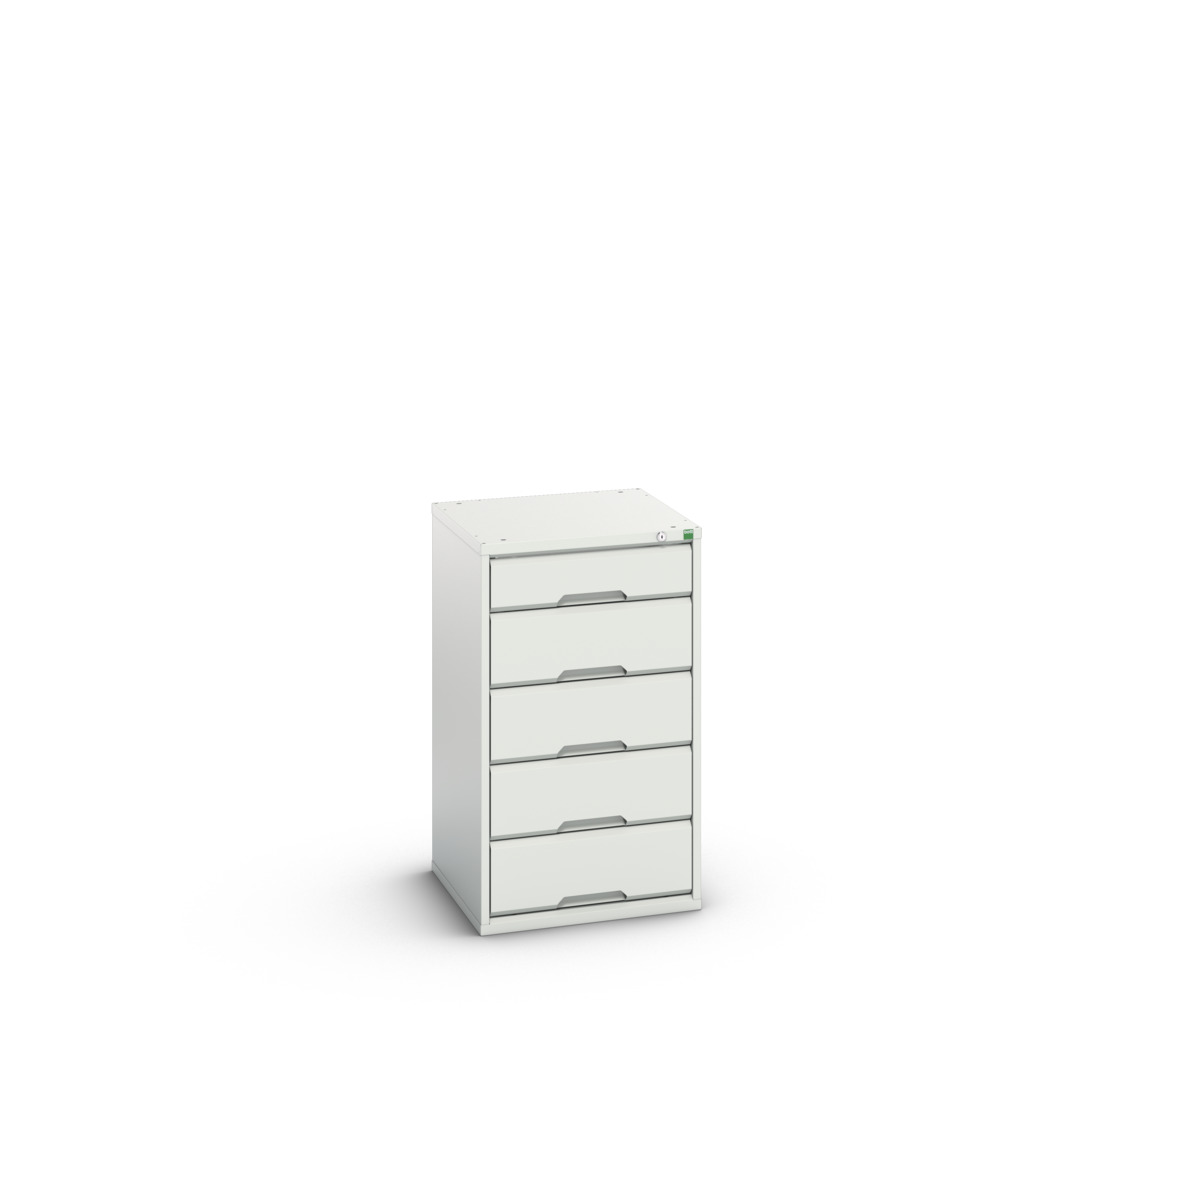 16925317.16 - verso drawer cabinet